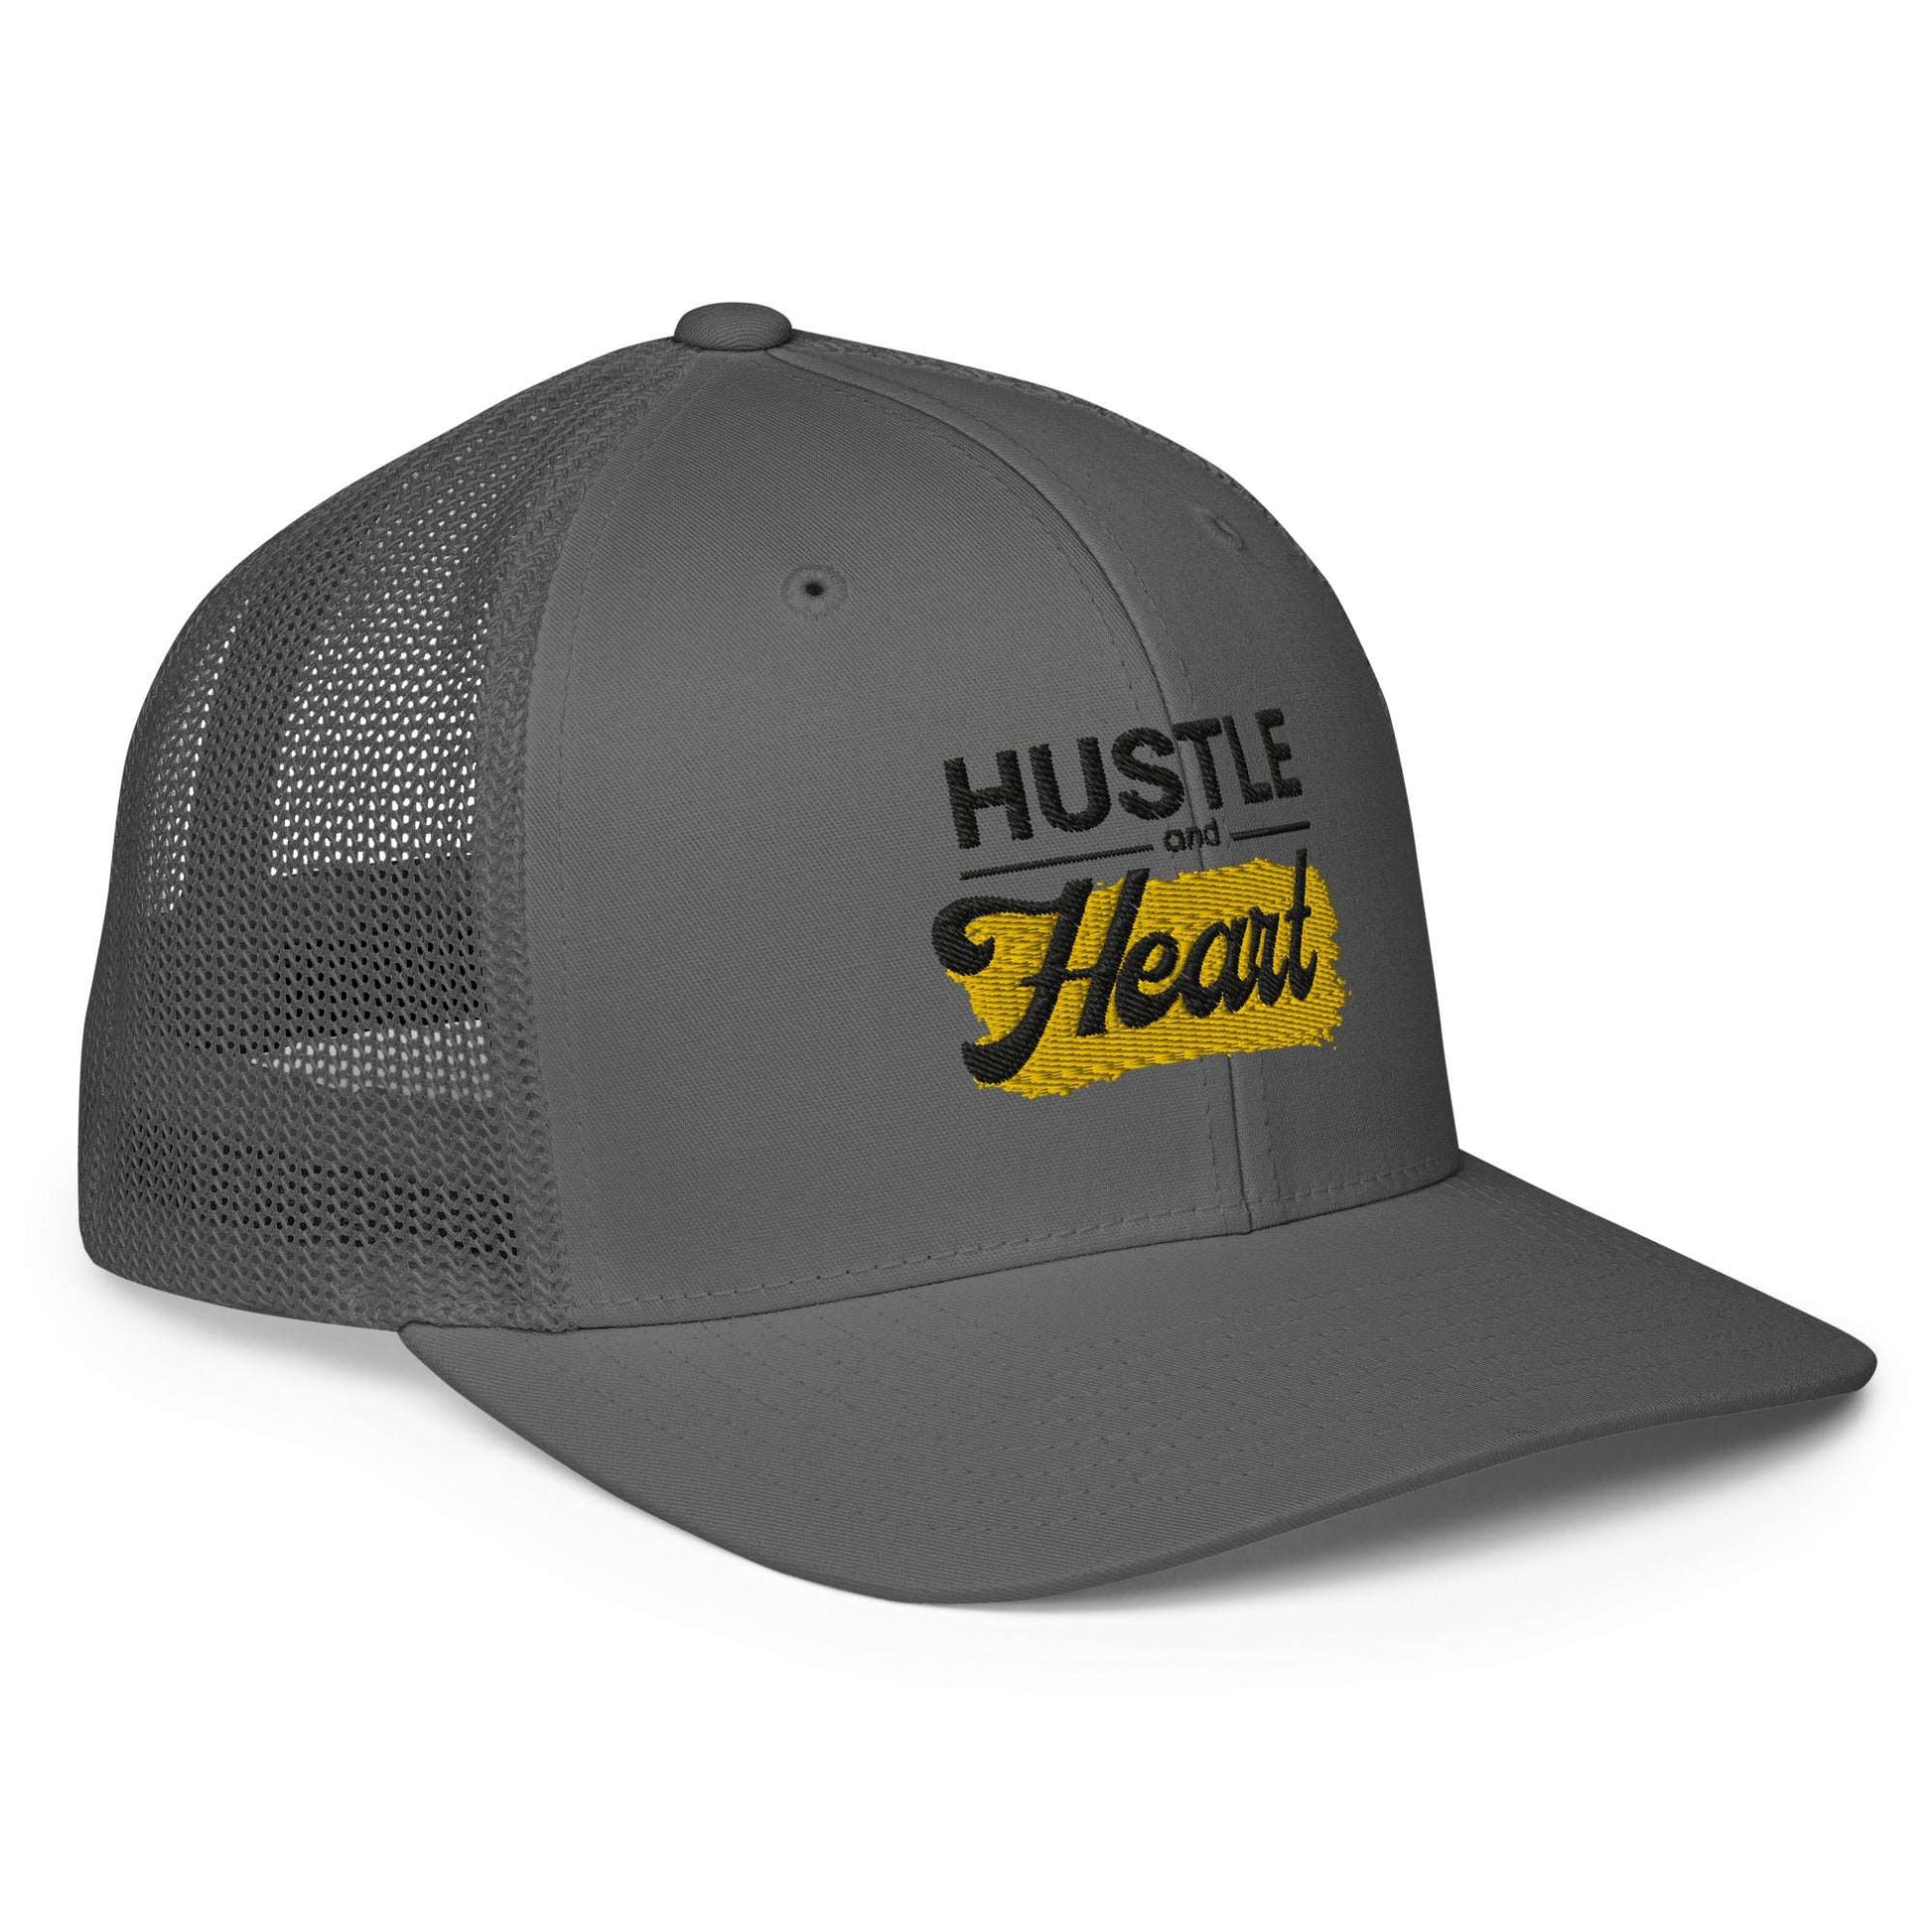 Hustle and Heart FlexFit Hat